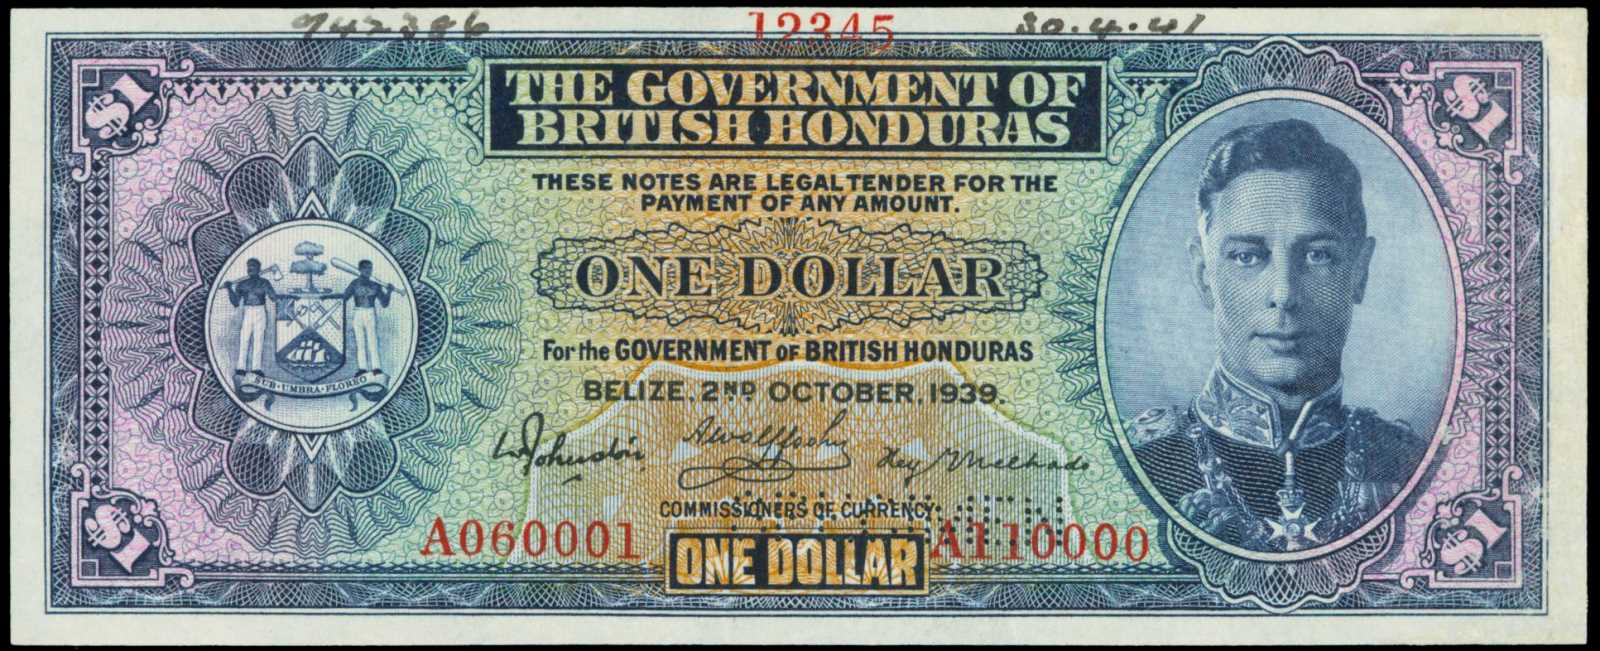 Номинал 1 доллар. Банкноты британского Гондураса. 1 Доллар 1942. Лемпира Гондурас банкноты. Банкнота 1 лемпира Гондурас.